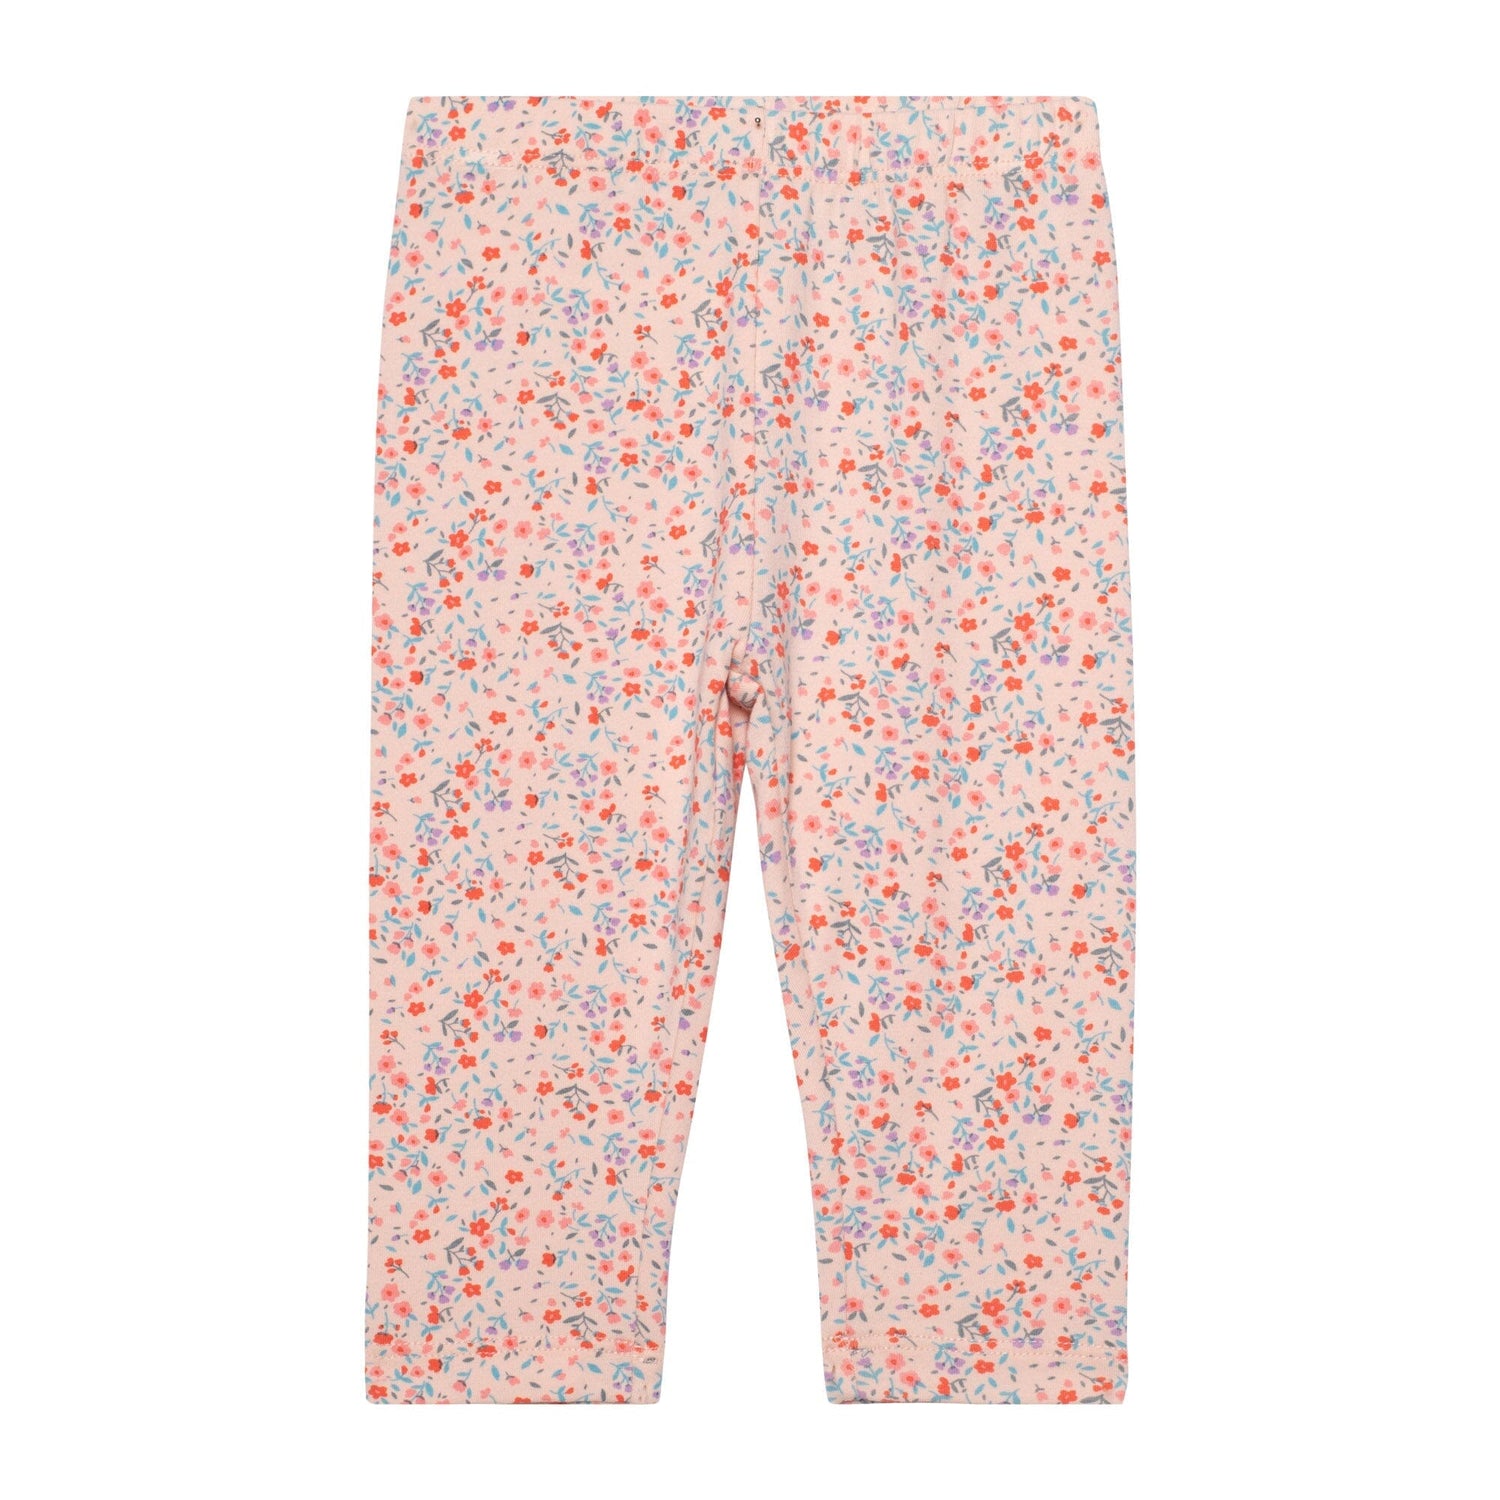 Organic Cotton Printed Tunic & Leggings Set Peach & Pink Little Flowers - E30A13_635